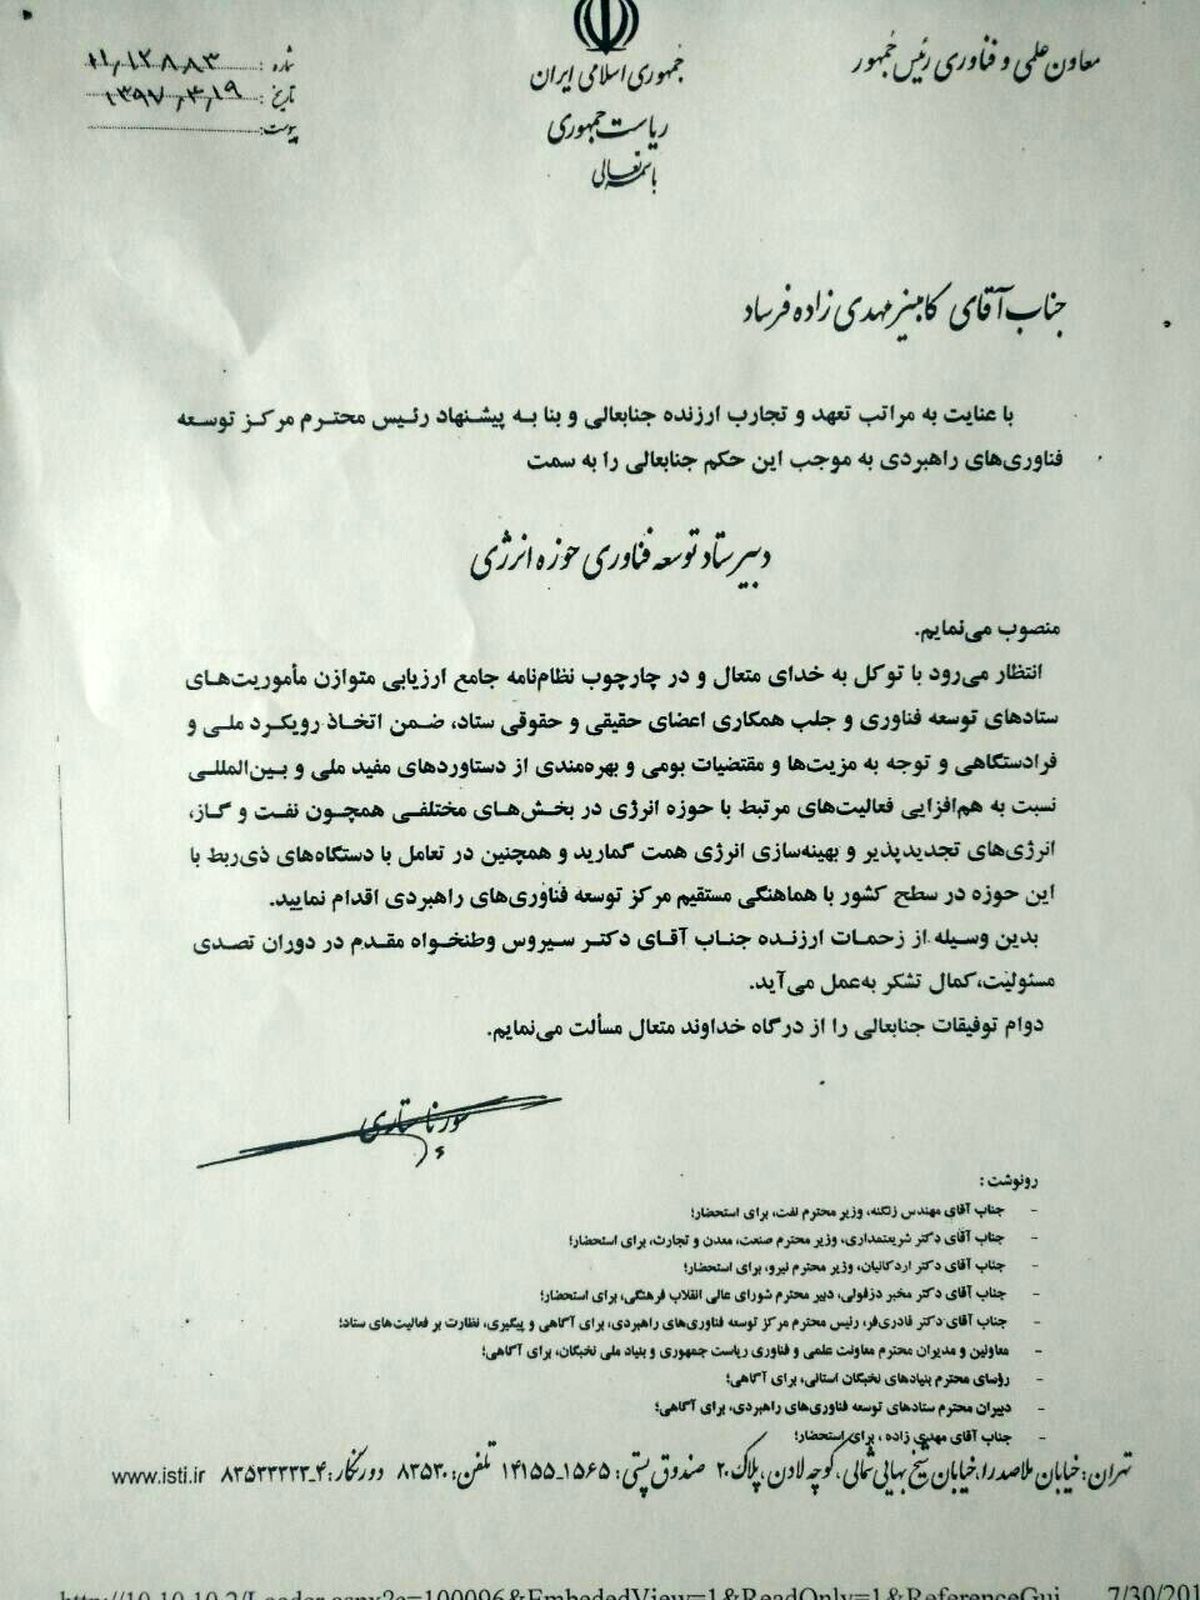 داماد حسن روحانی در دولت مسئولیت گرفت+سند